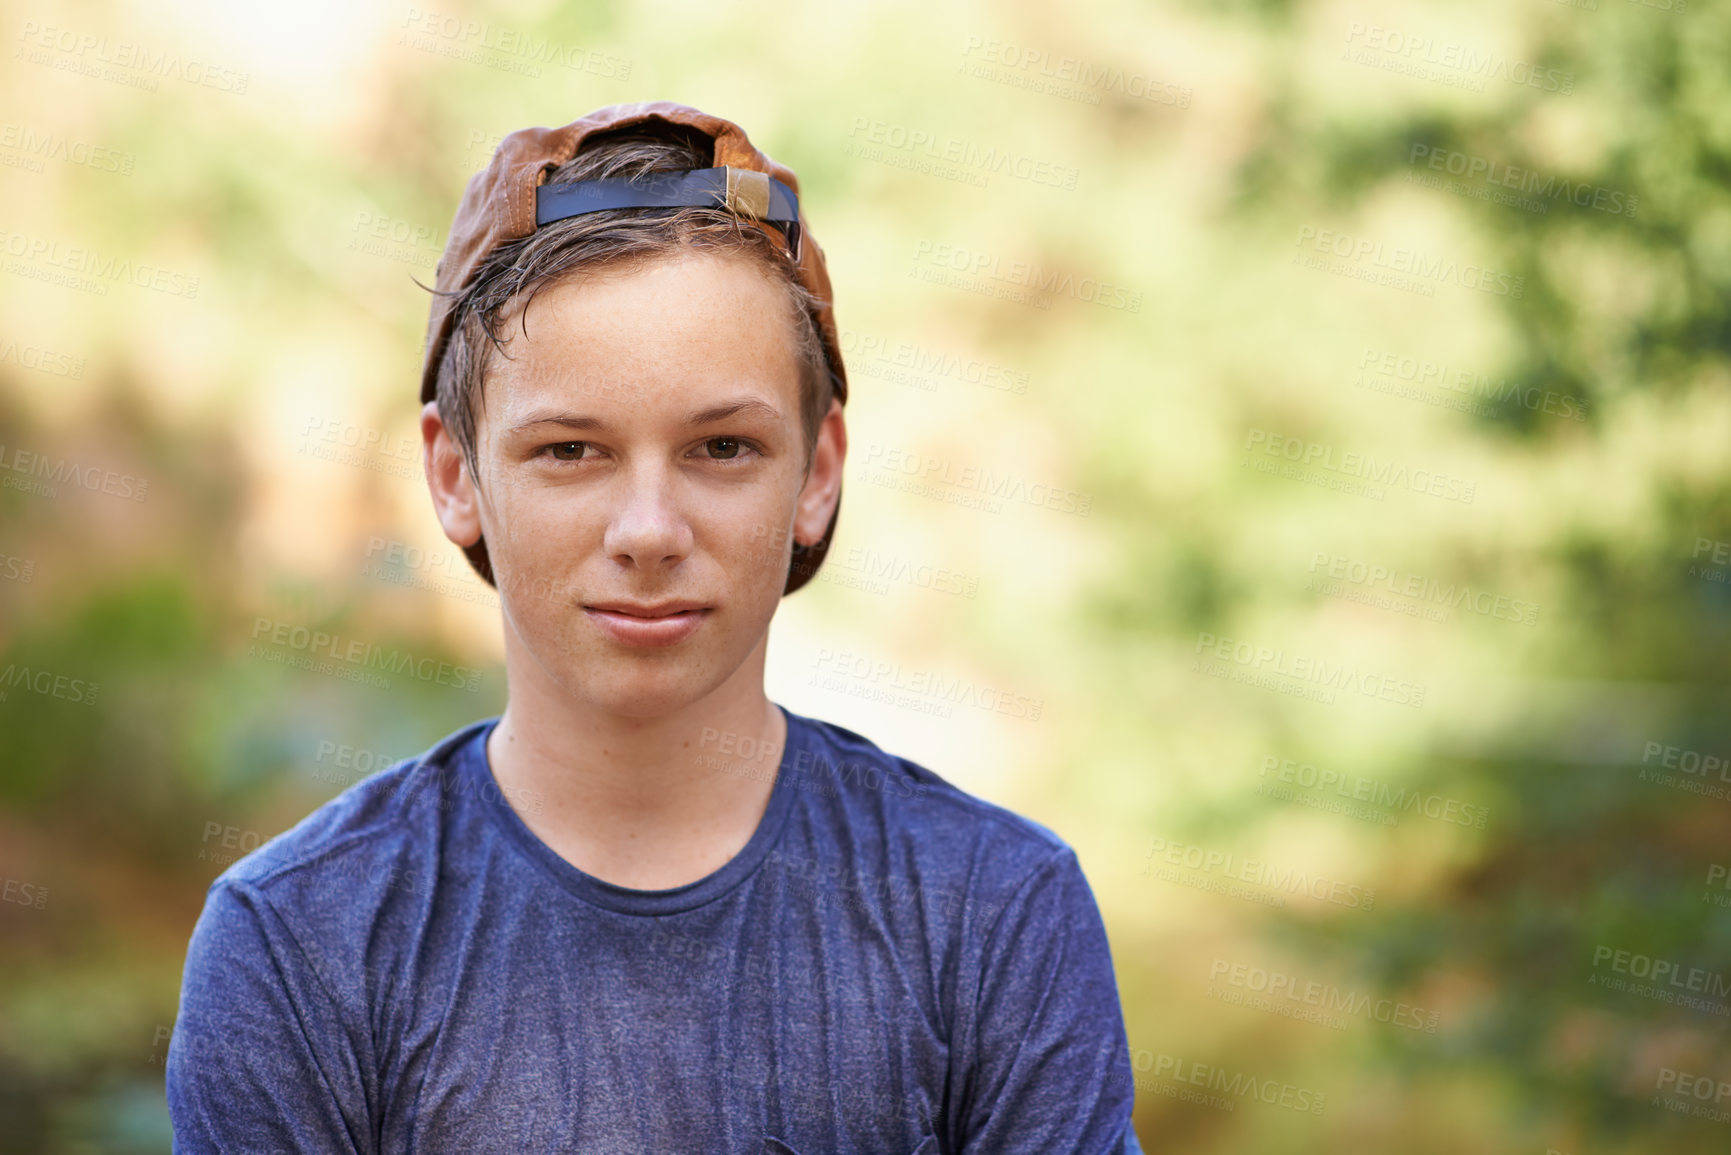 Buy stock photo Portrait of confident teenage boy standing outdoors